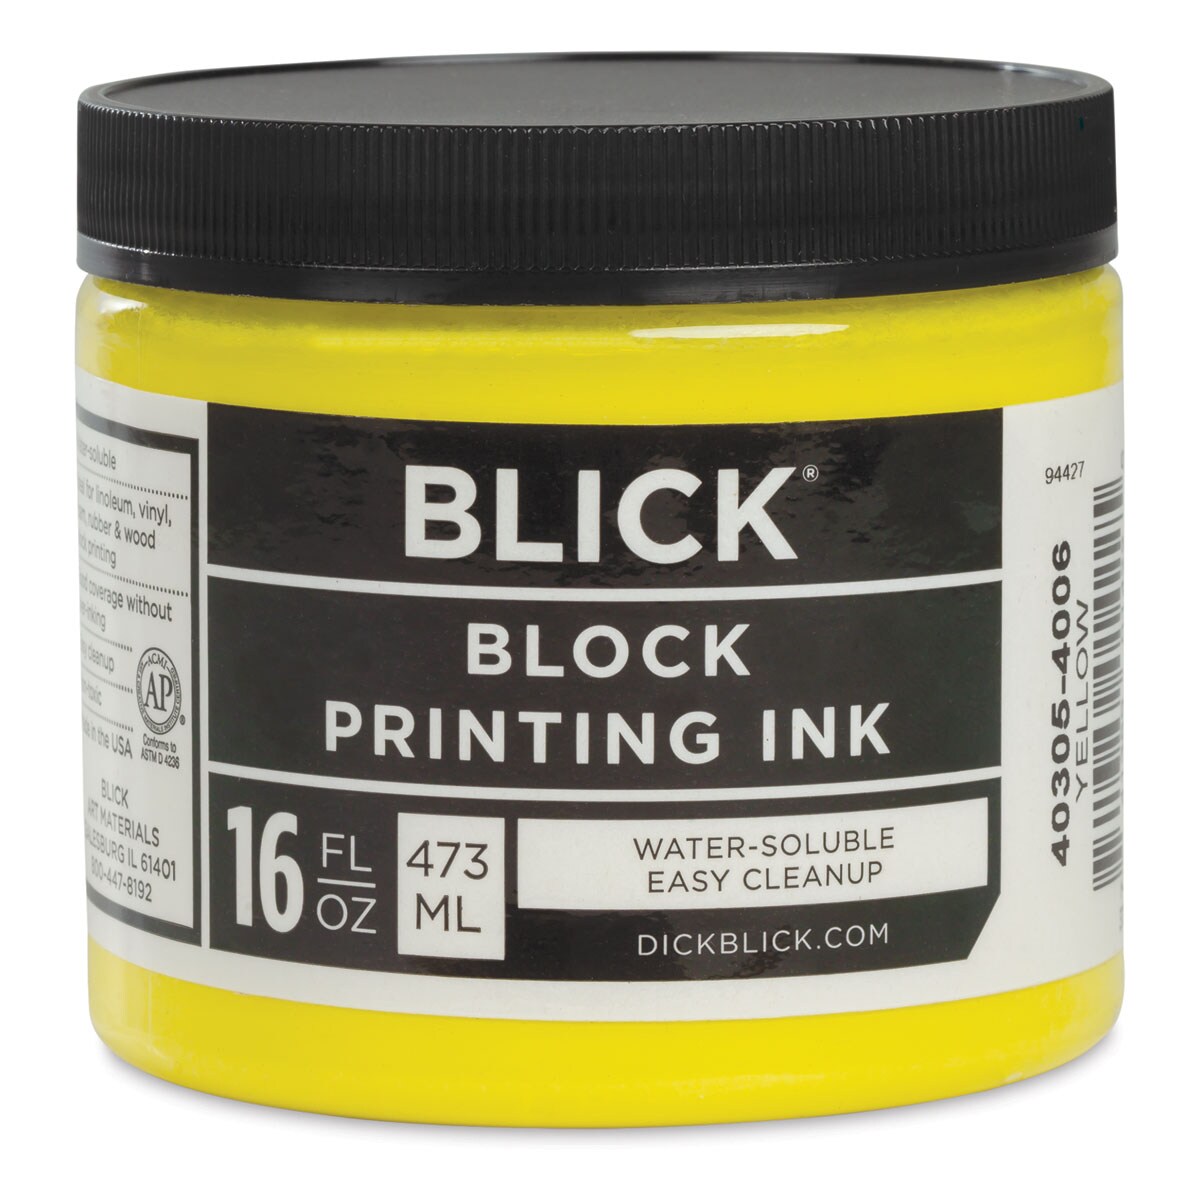 Blick Water-Soluble Block Printing Ink - Yellow, 16 oz Jar